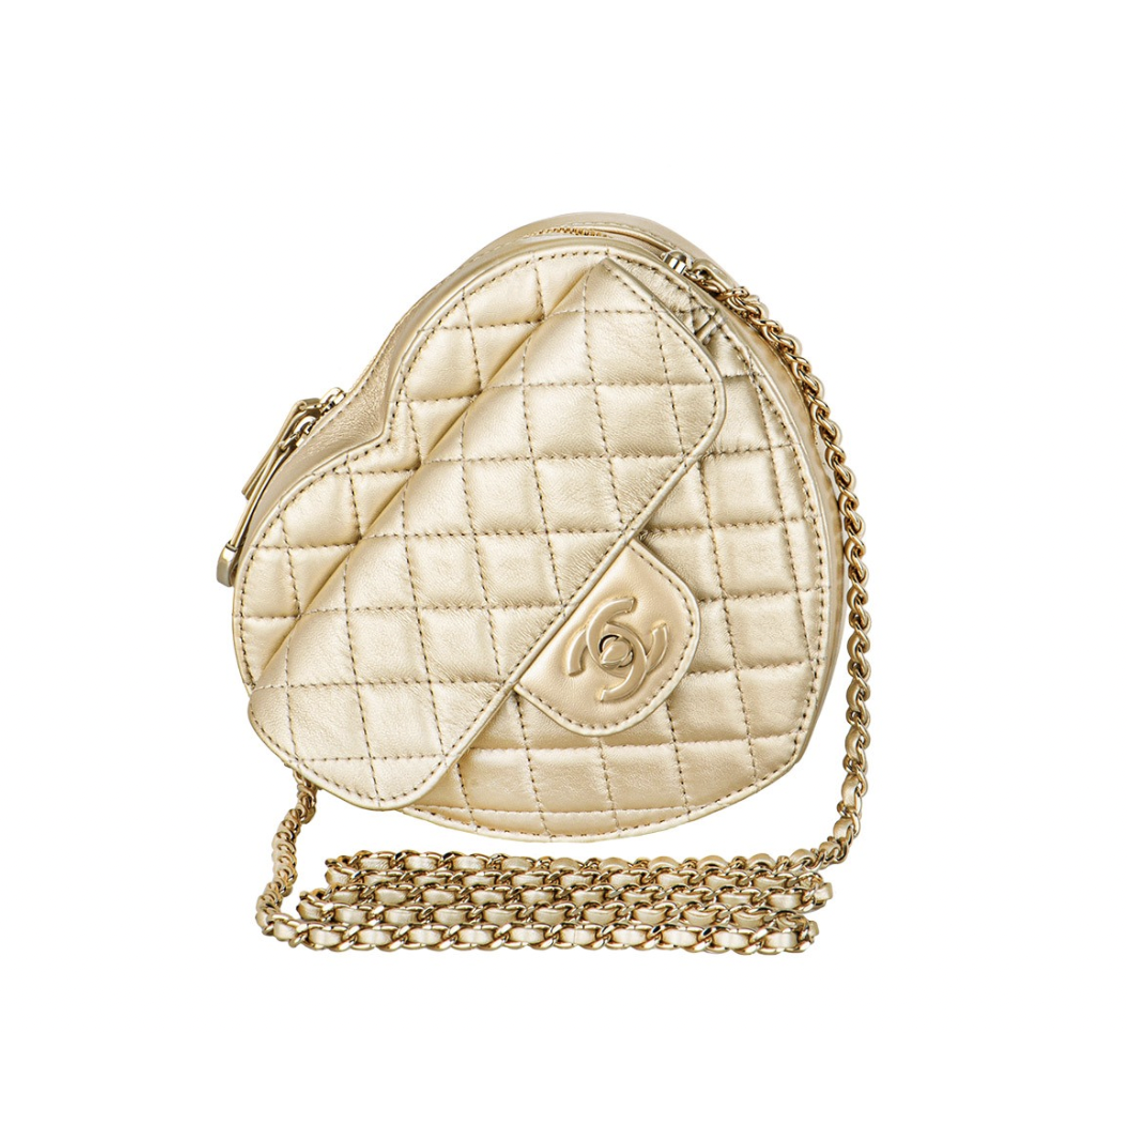 Chanel CC In Love Large Heart Bag Gold Lambskin Light Gold Hardware